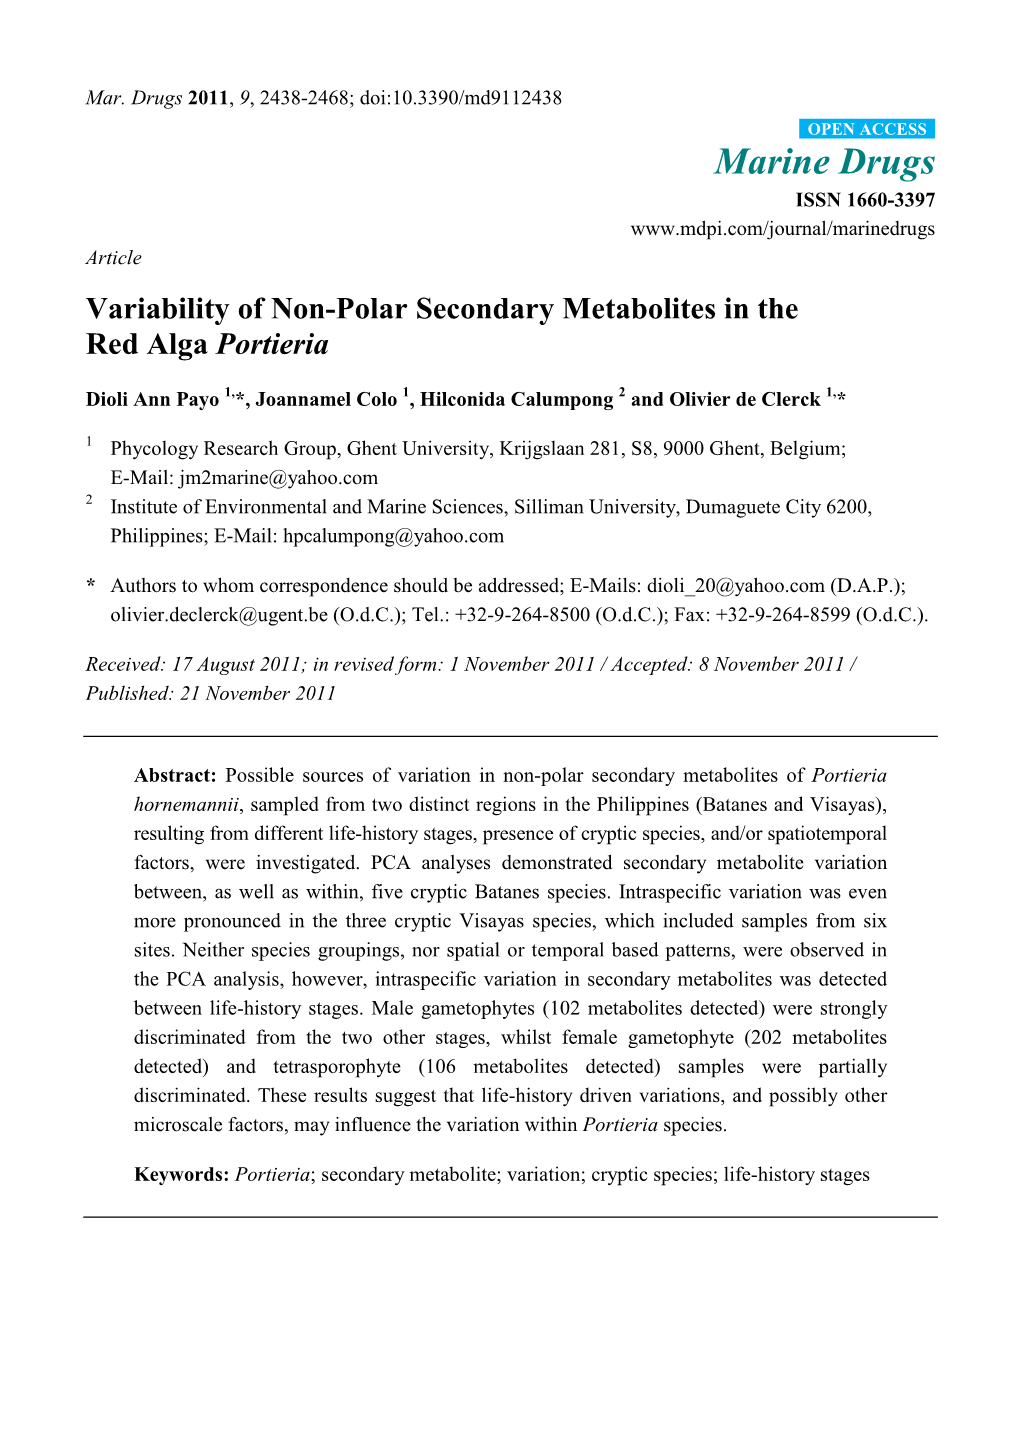 Variability of Non-Polar Secondary Metabolites in the Red Alga Portieria